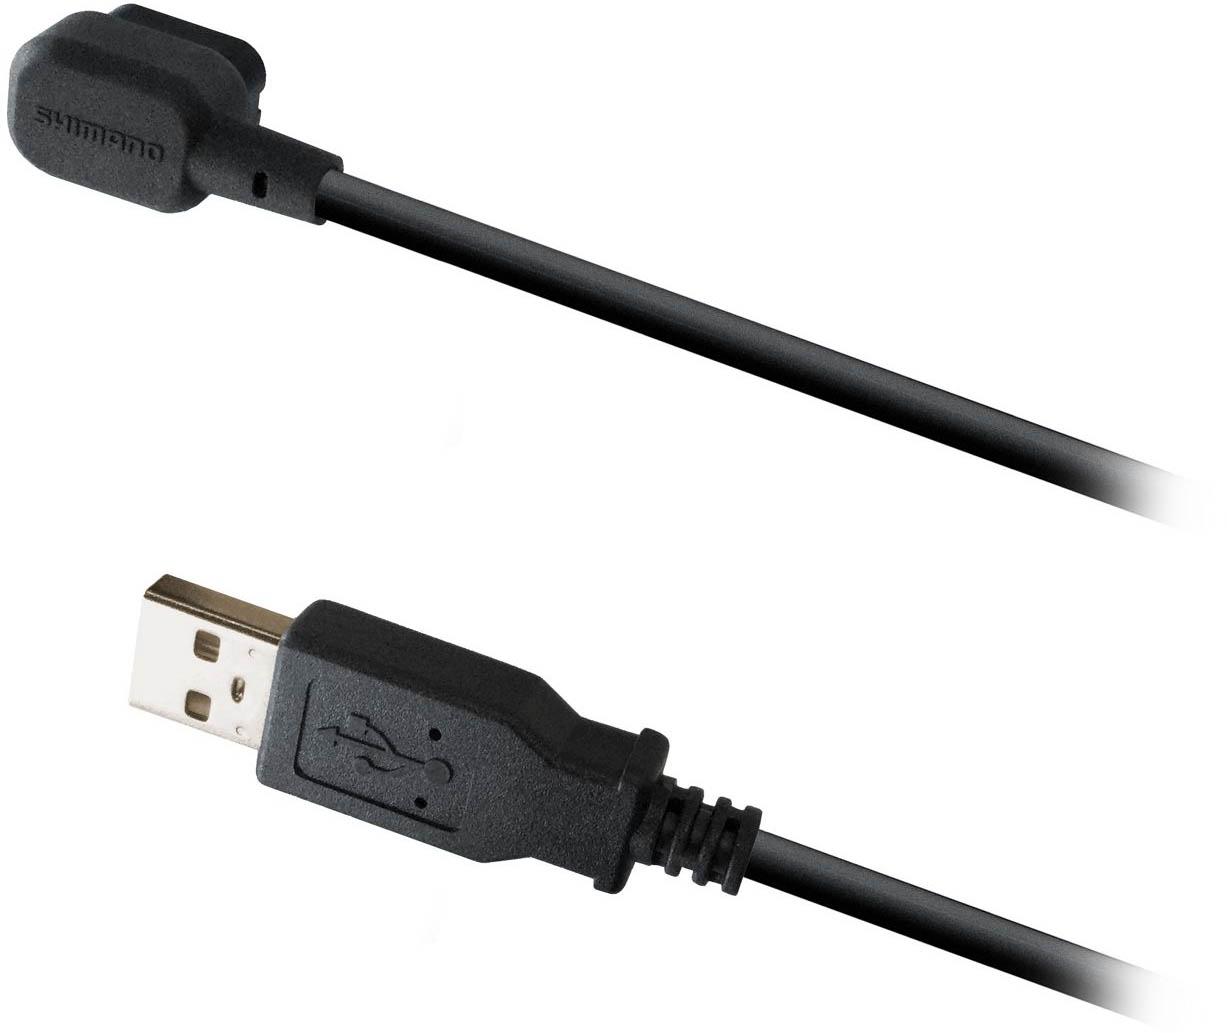 Shimano Ec300 Di2 Charging Cable - Black